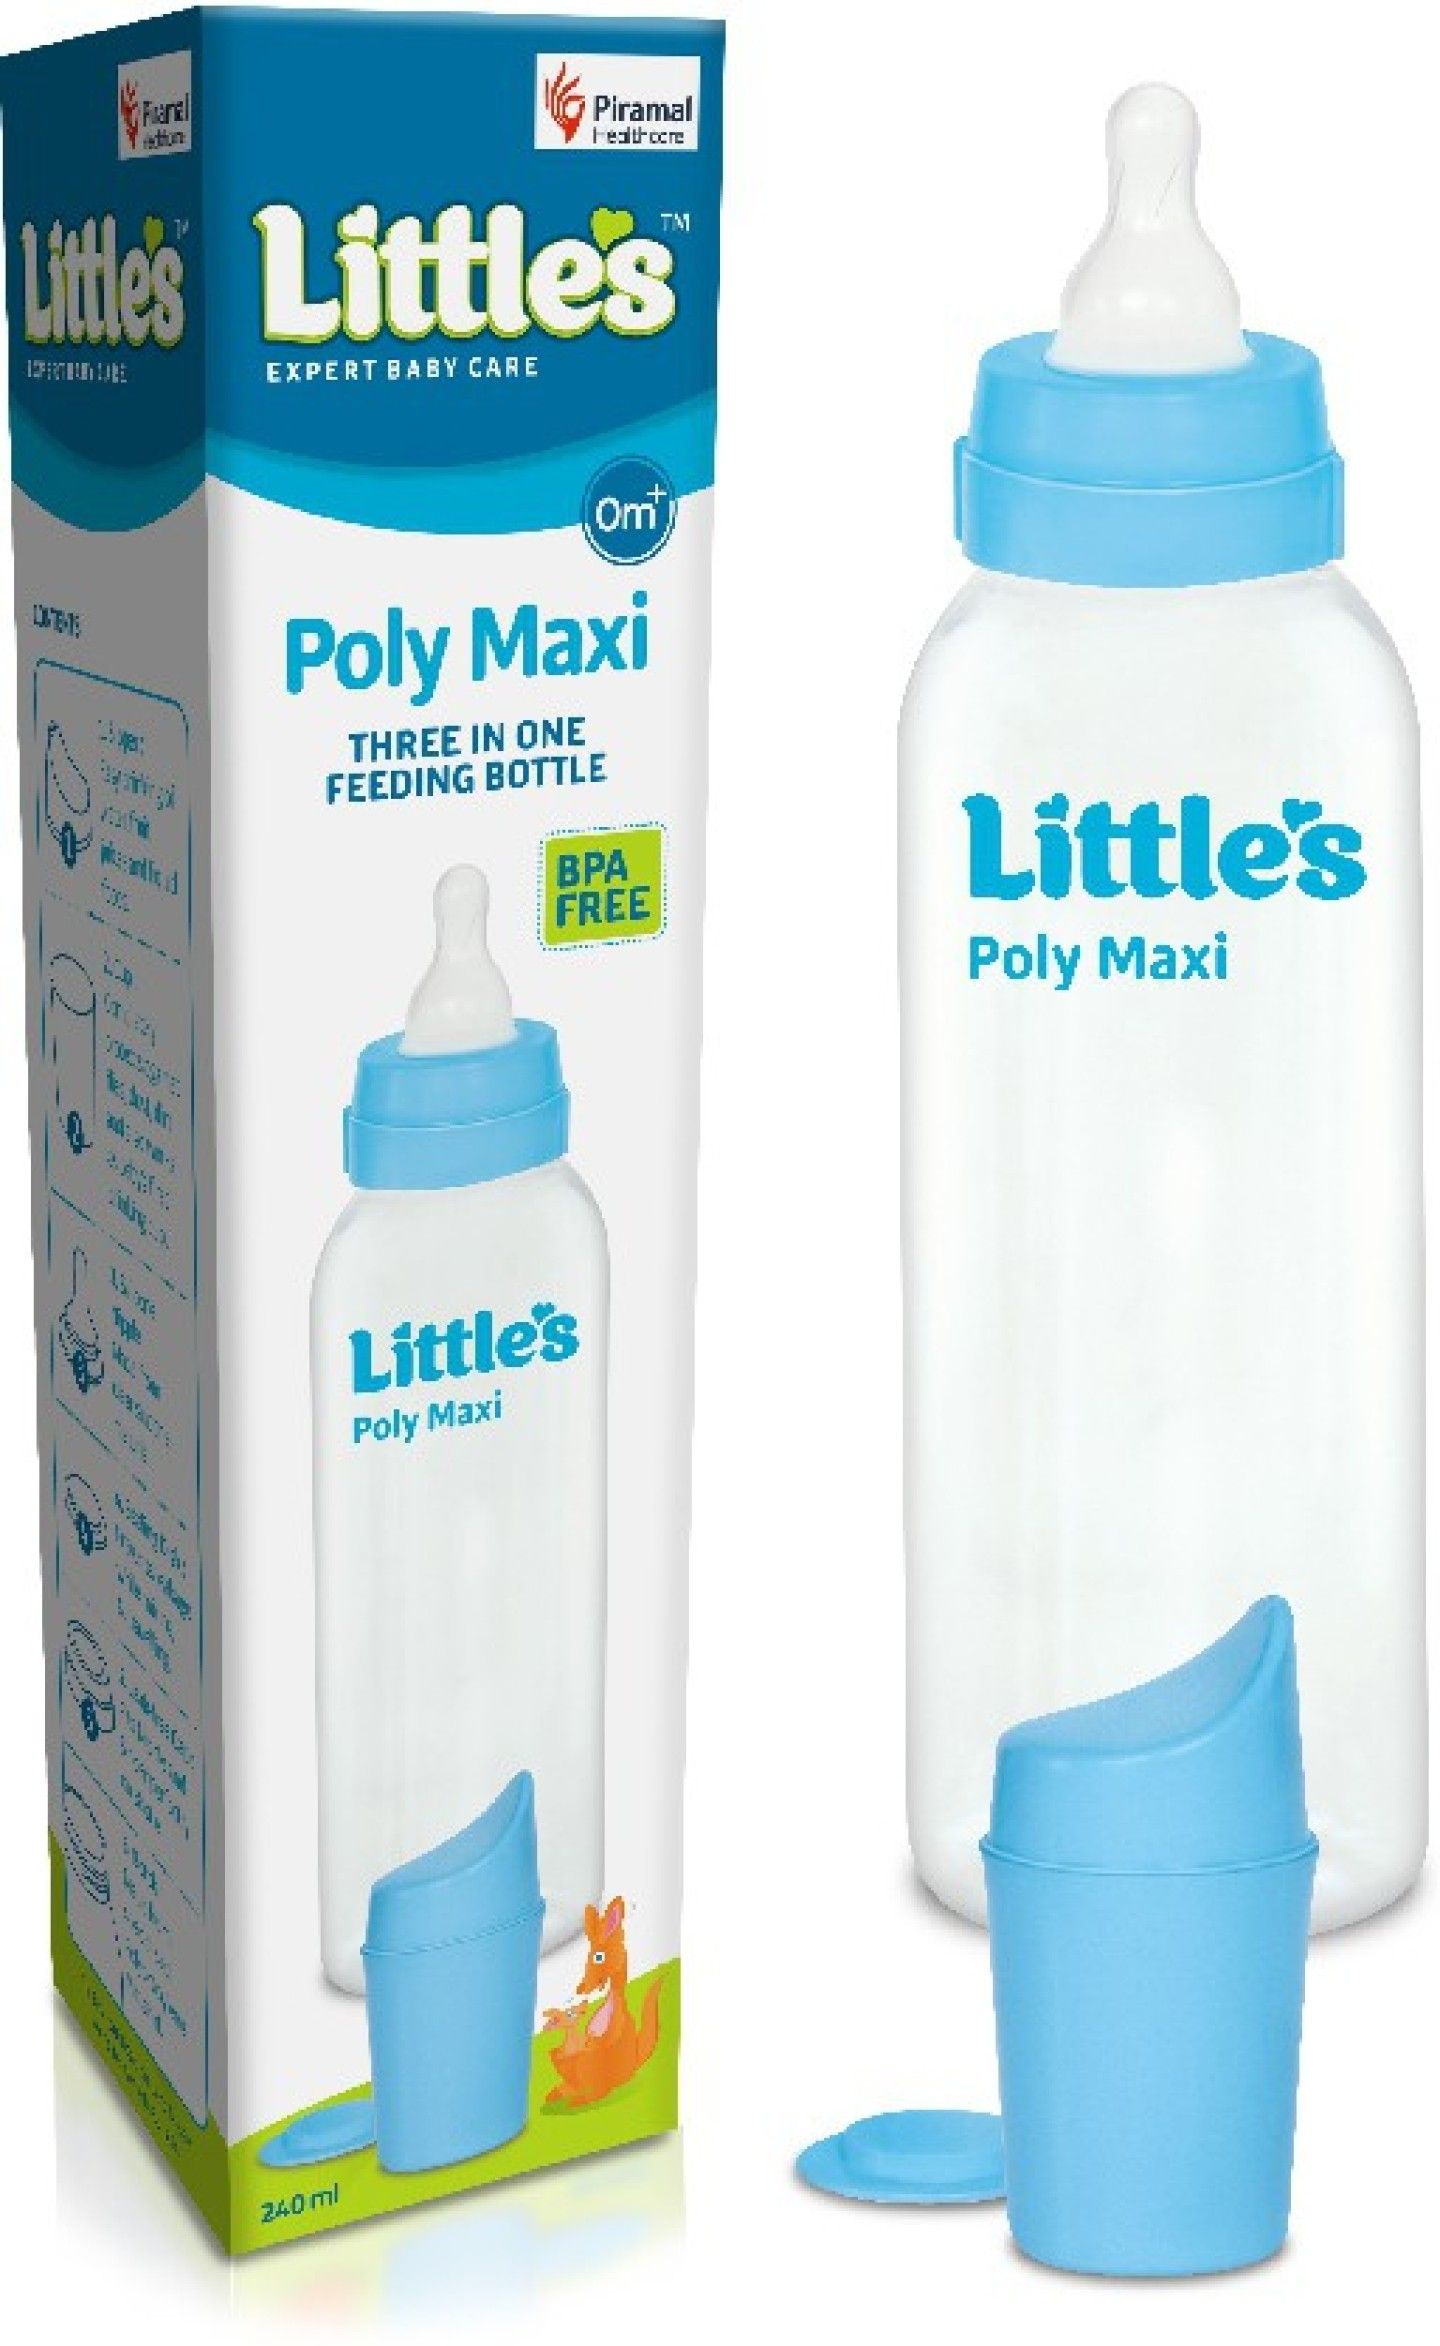 Little's Poly Maxi Blue Feeding Bottle, 240 ml, Pack of 1 